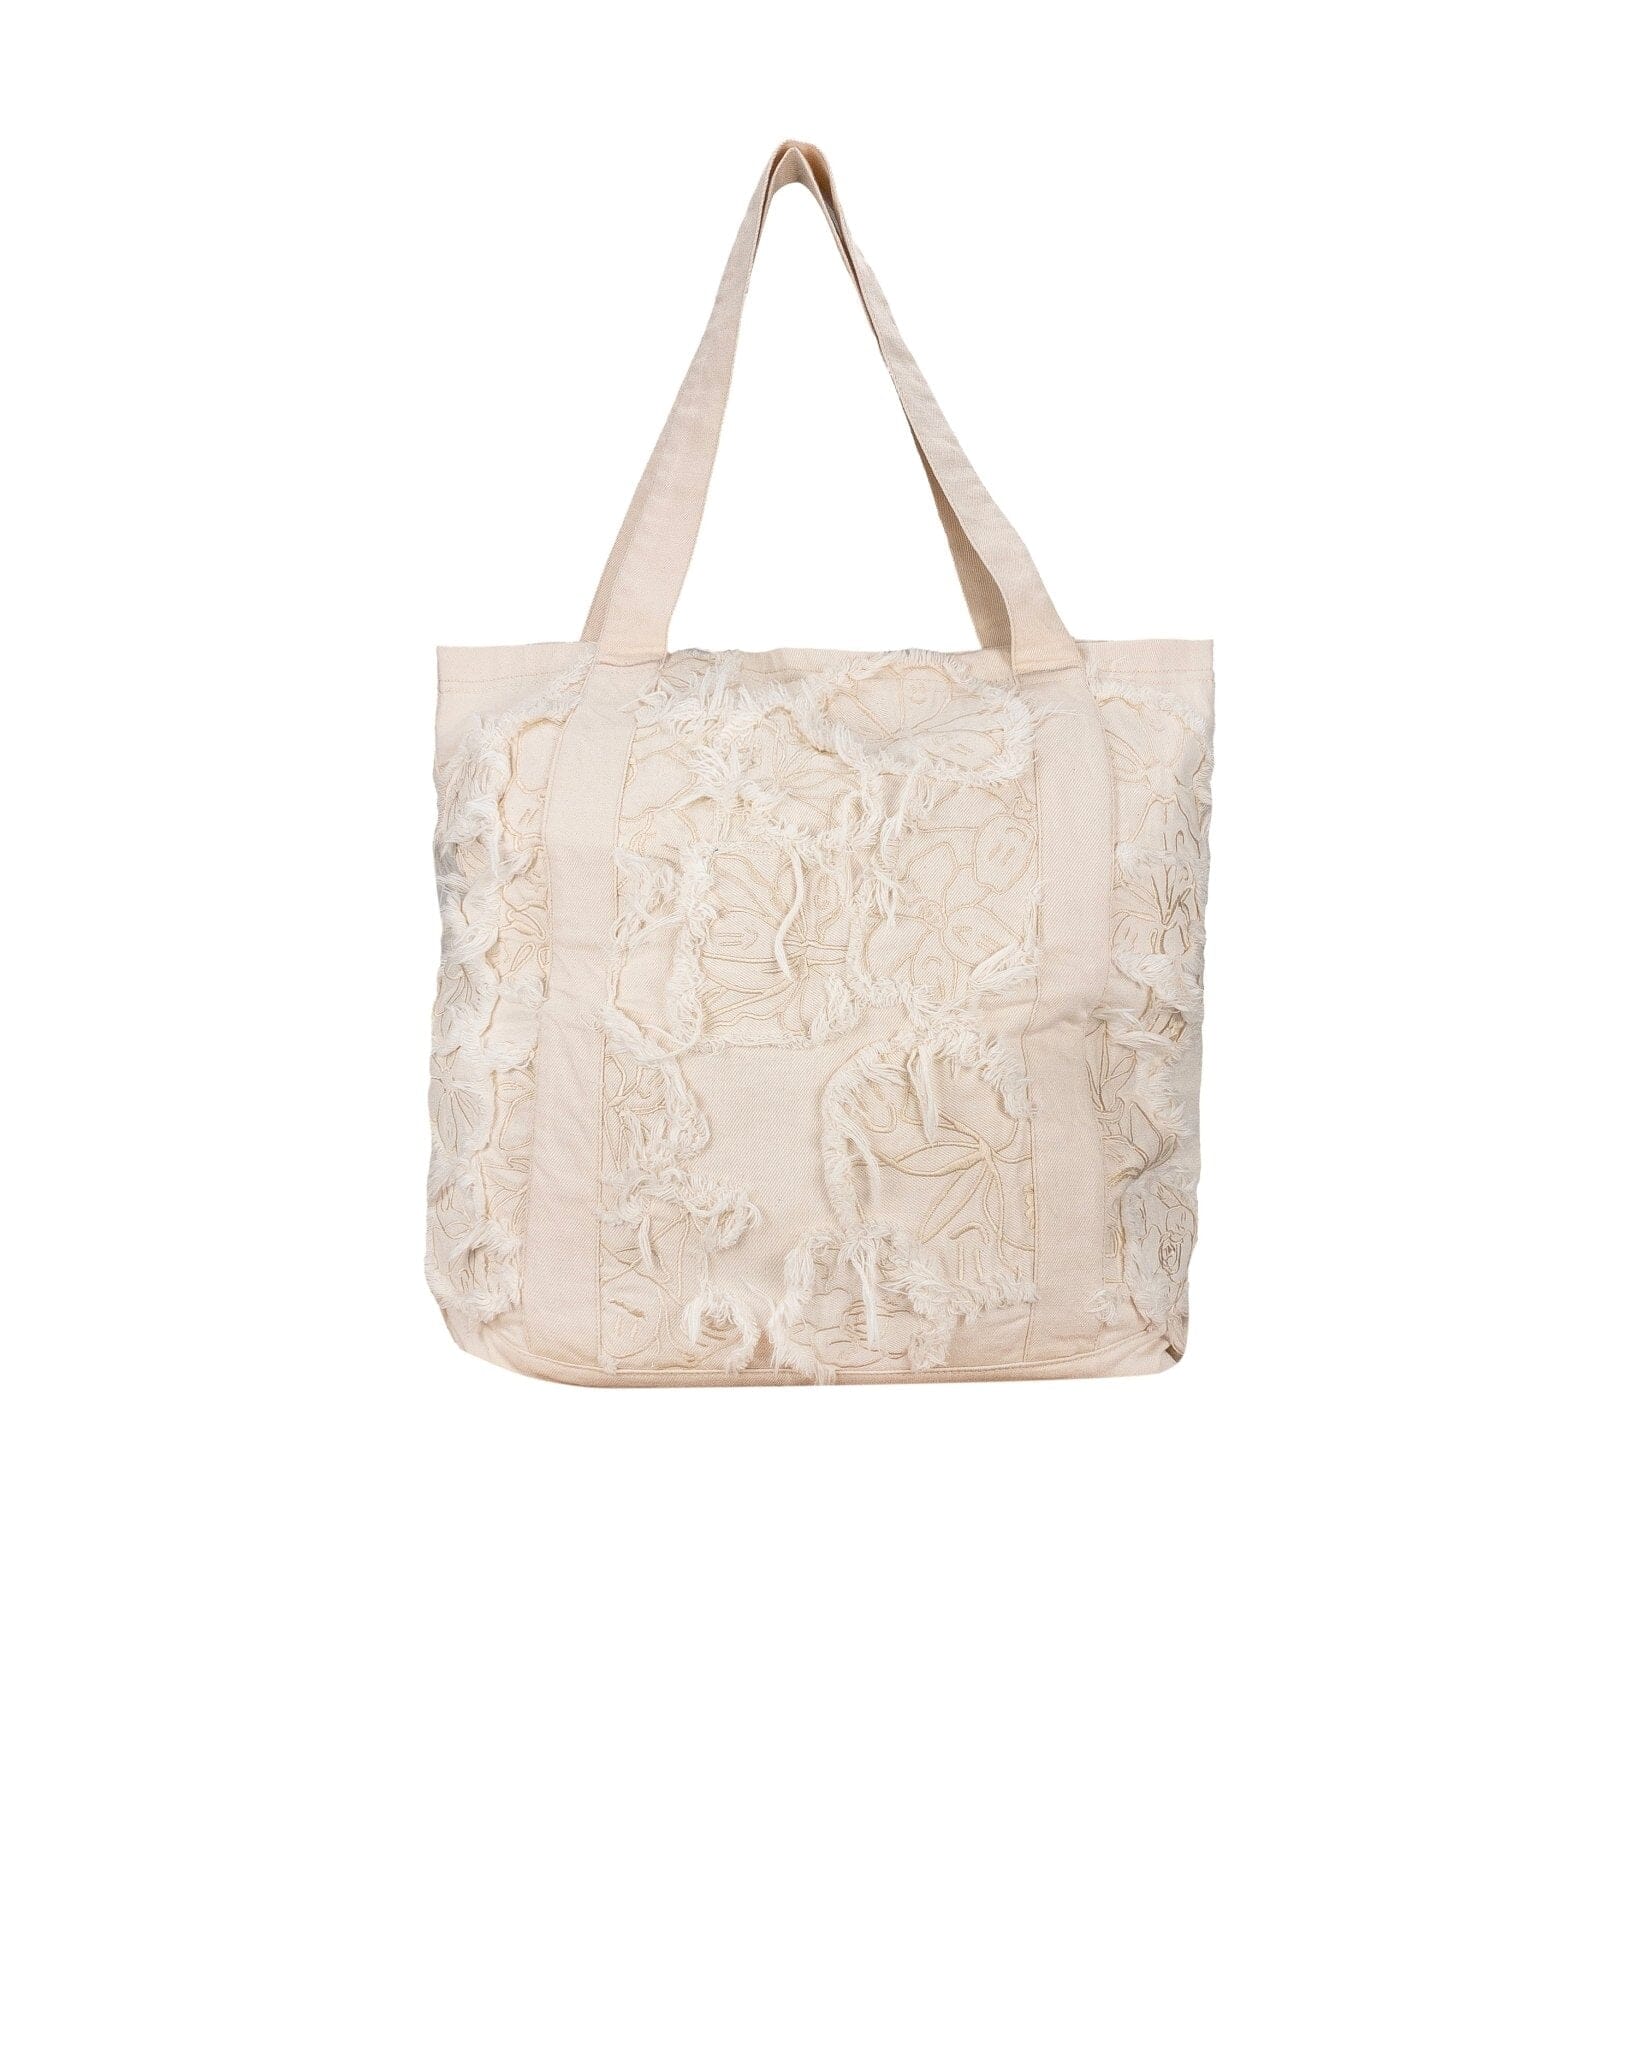 Denim shopper bag patchwork flowered cream